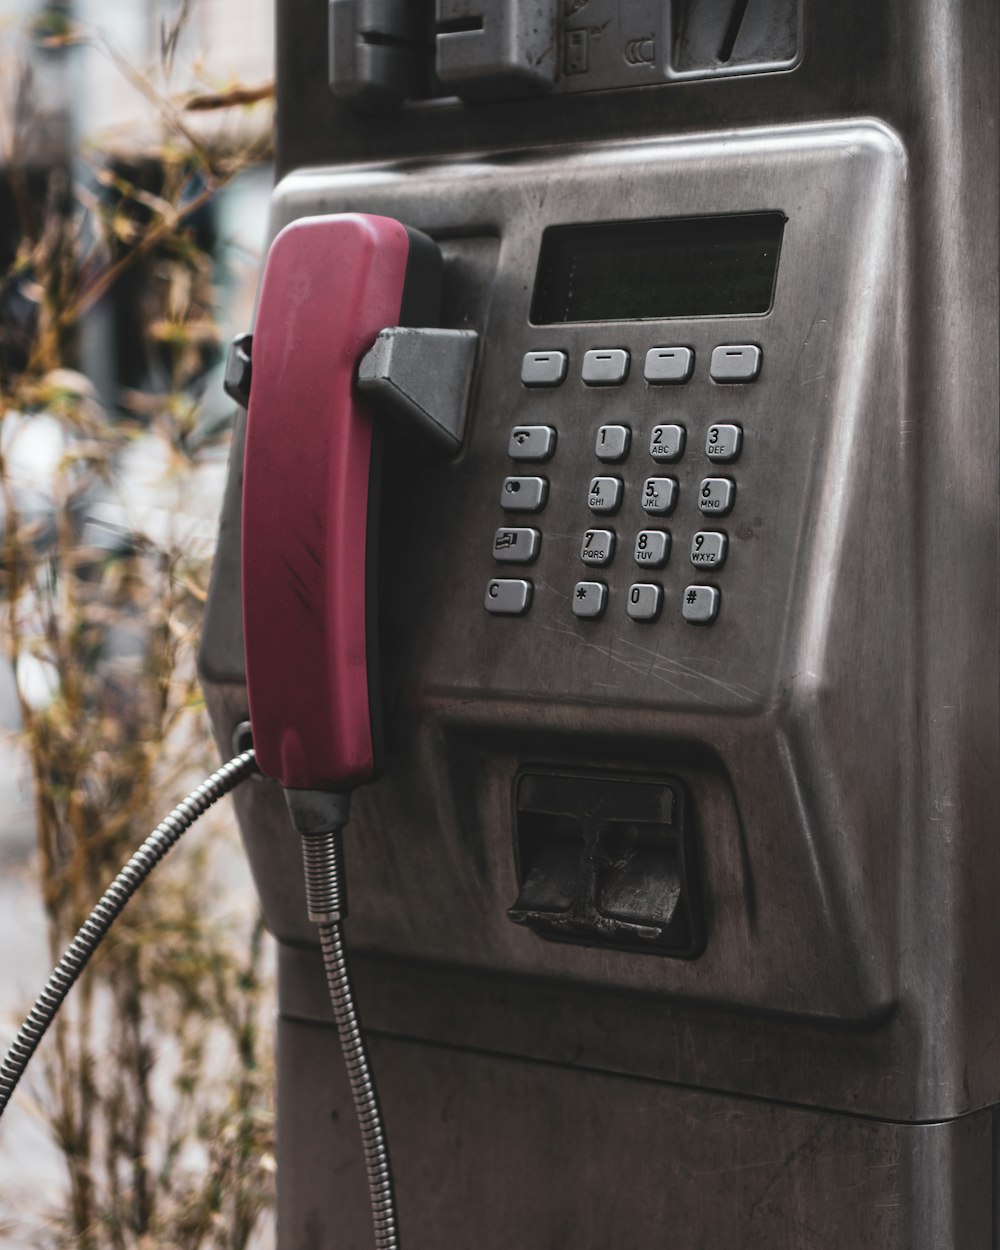 cabina telefonica nera e rossa